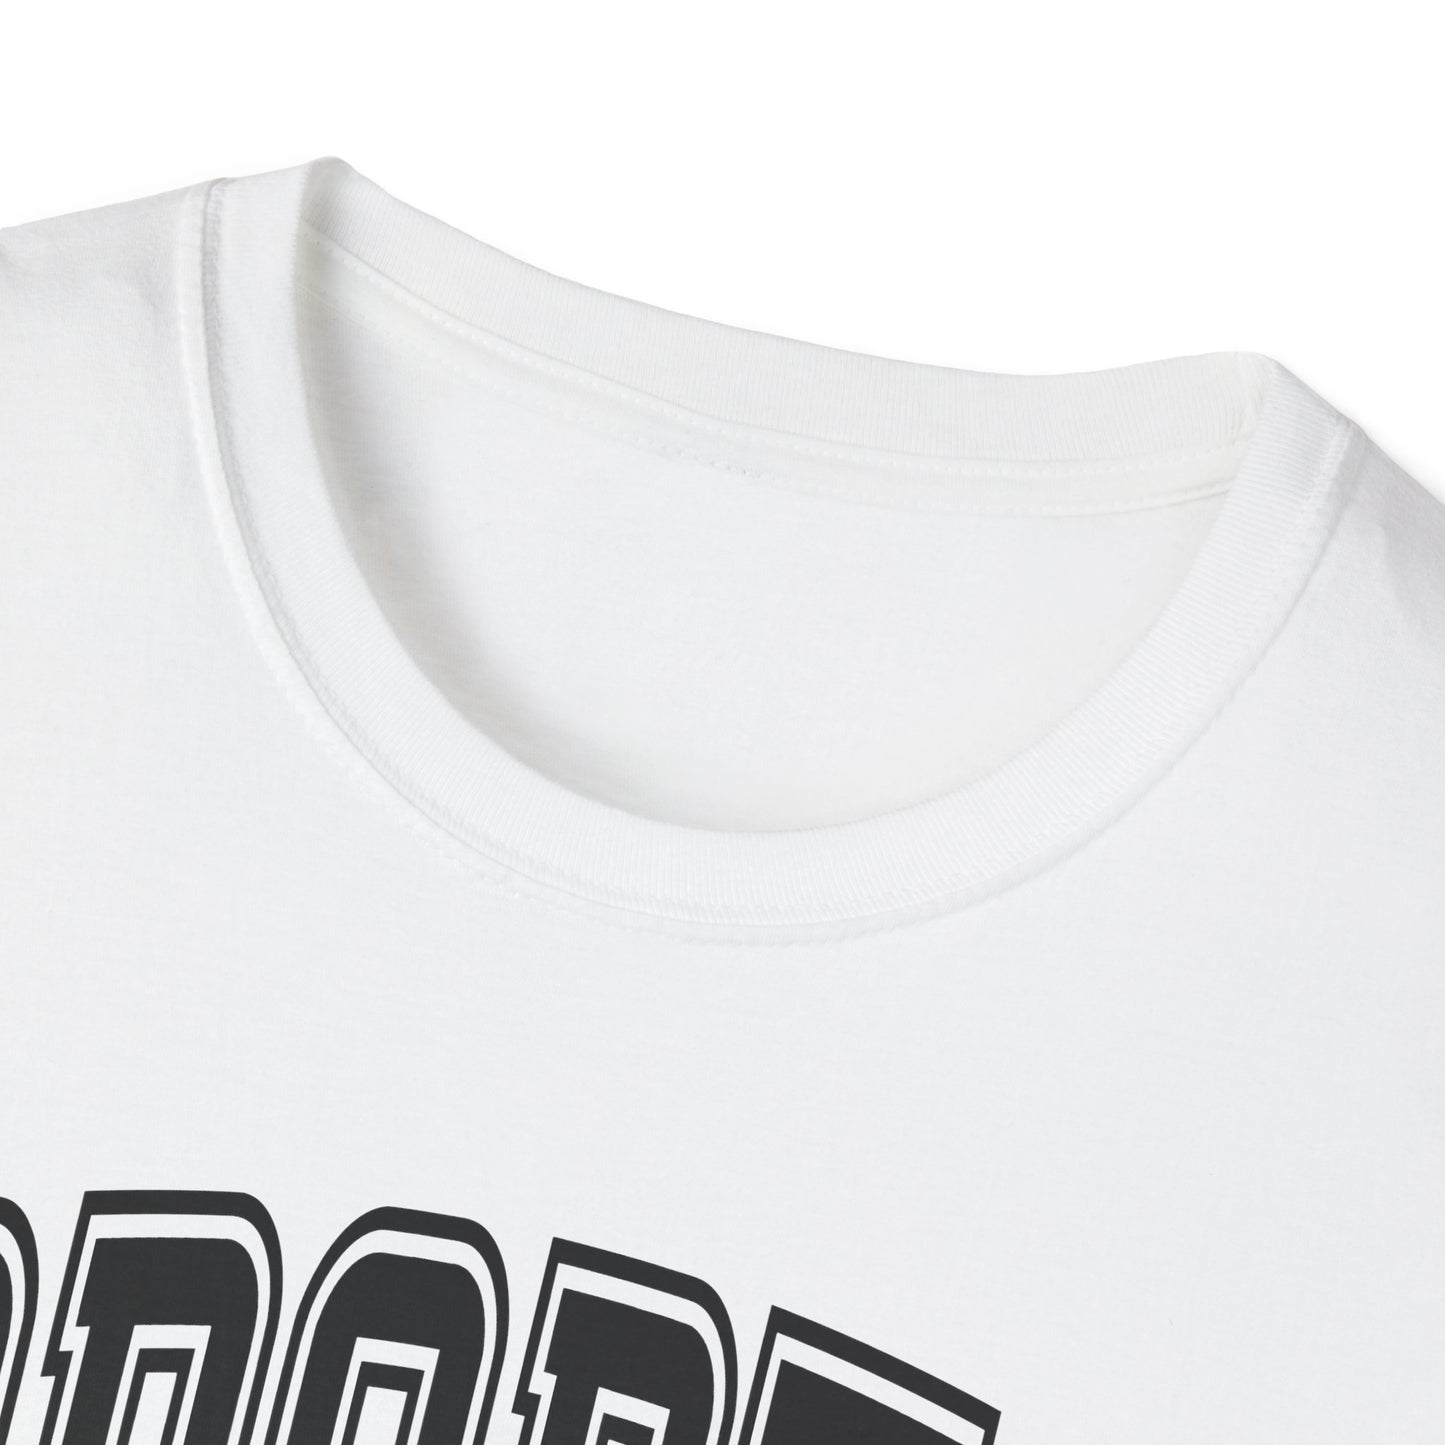 Sports Mama University - Unisex Softstyle T-Shirt